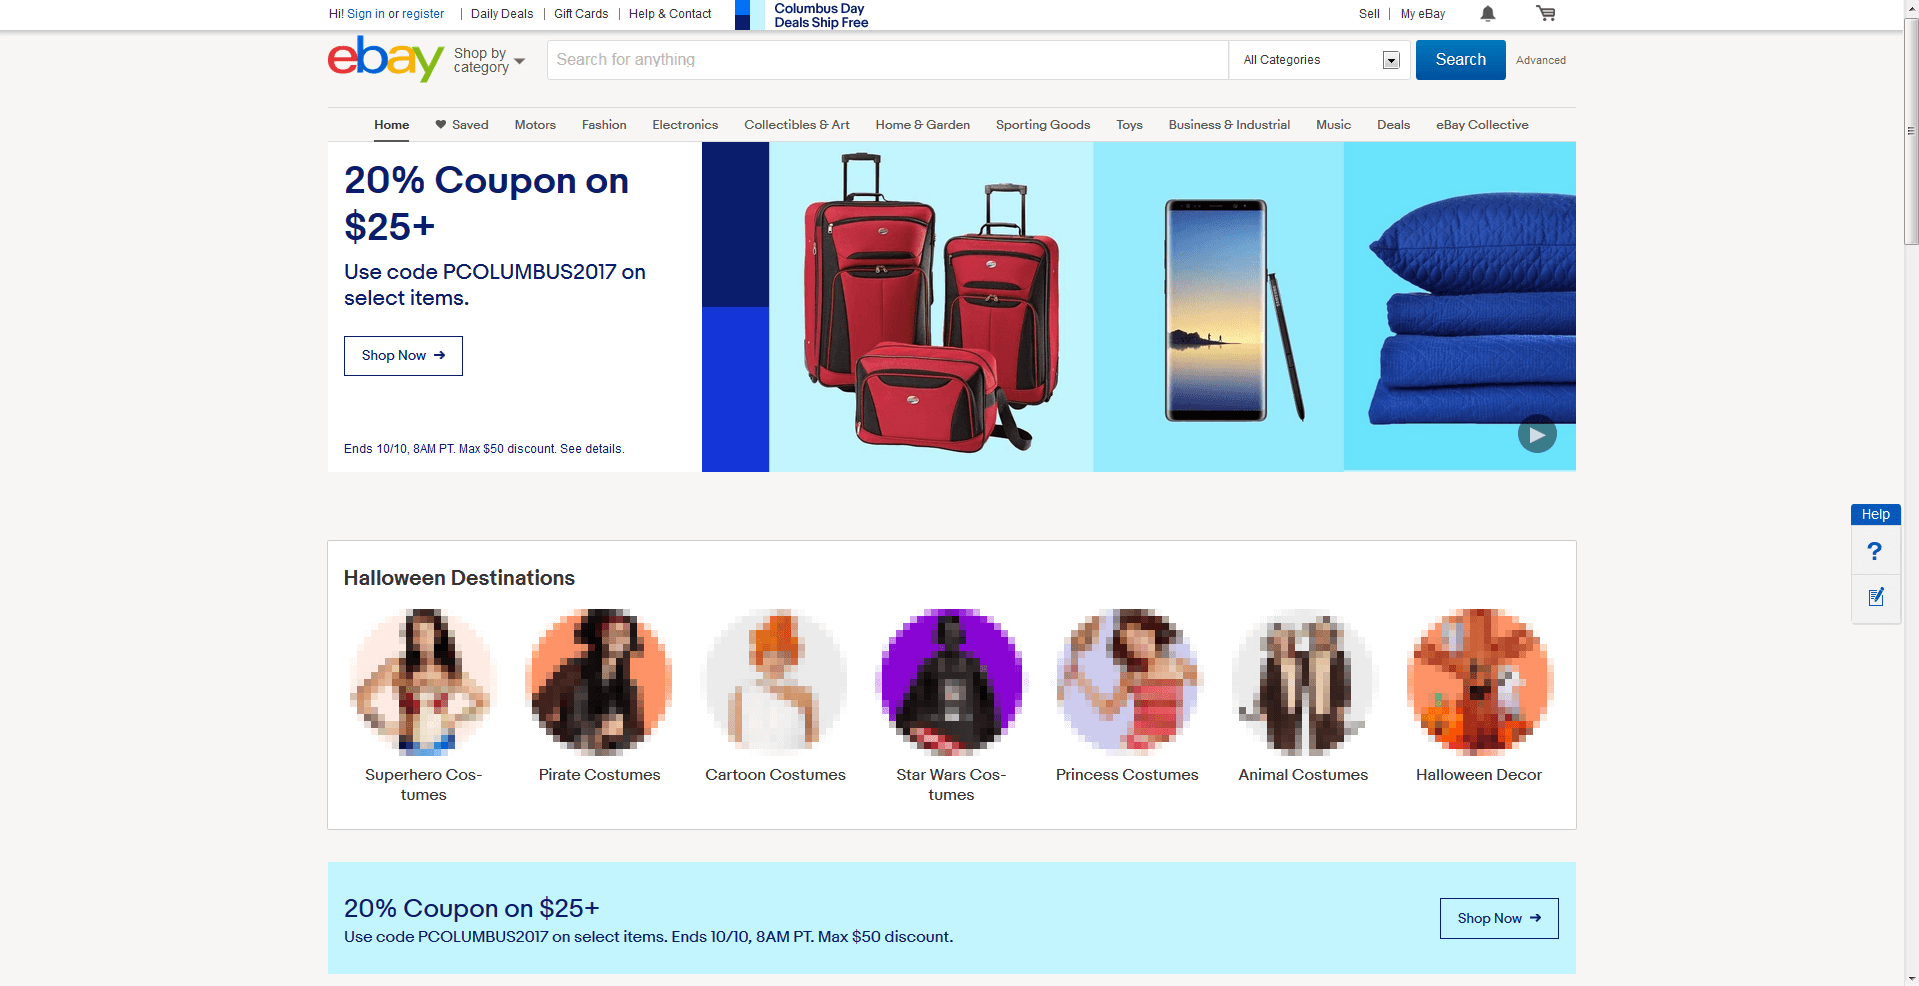 Homepage of ebay.com